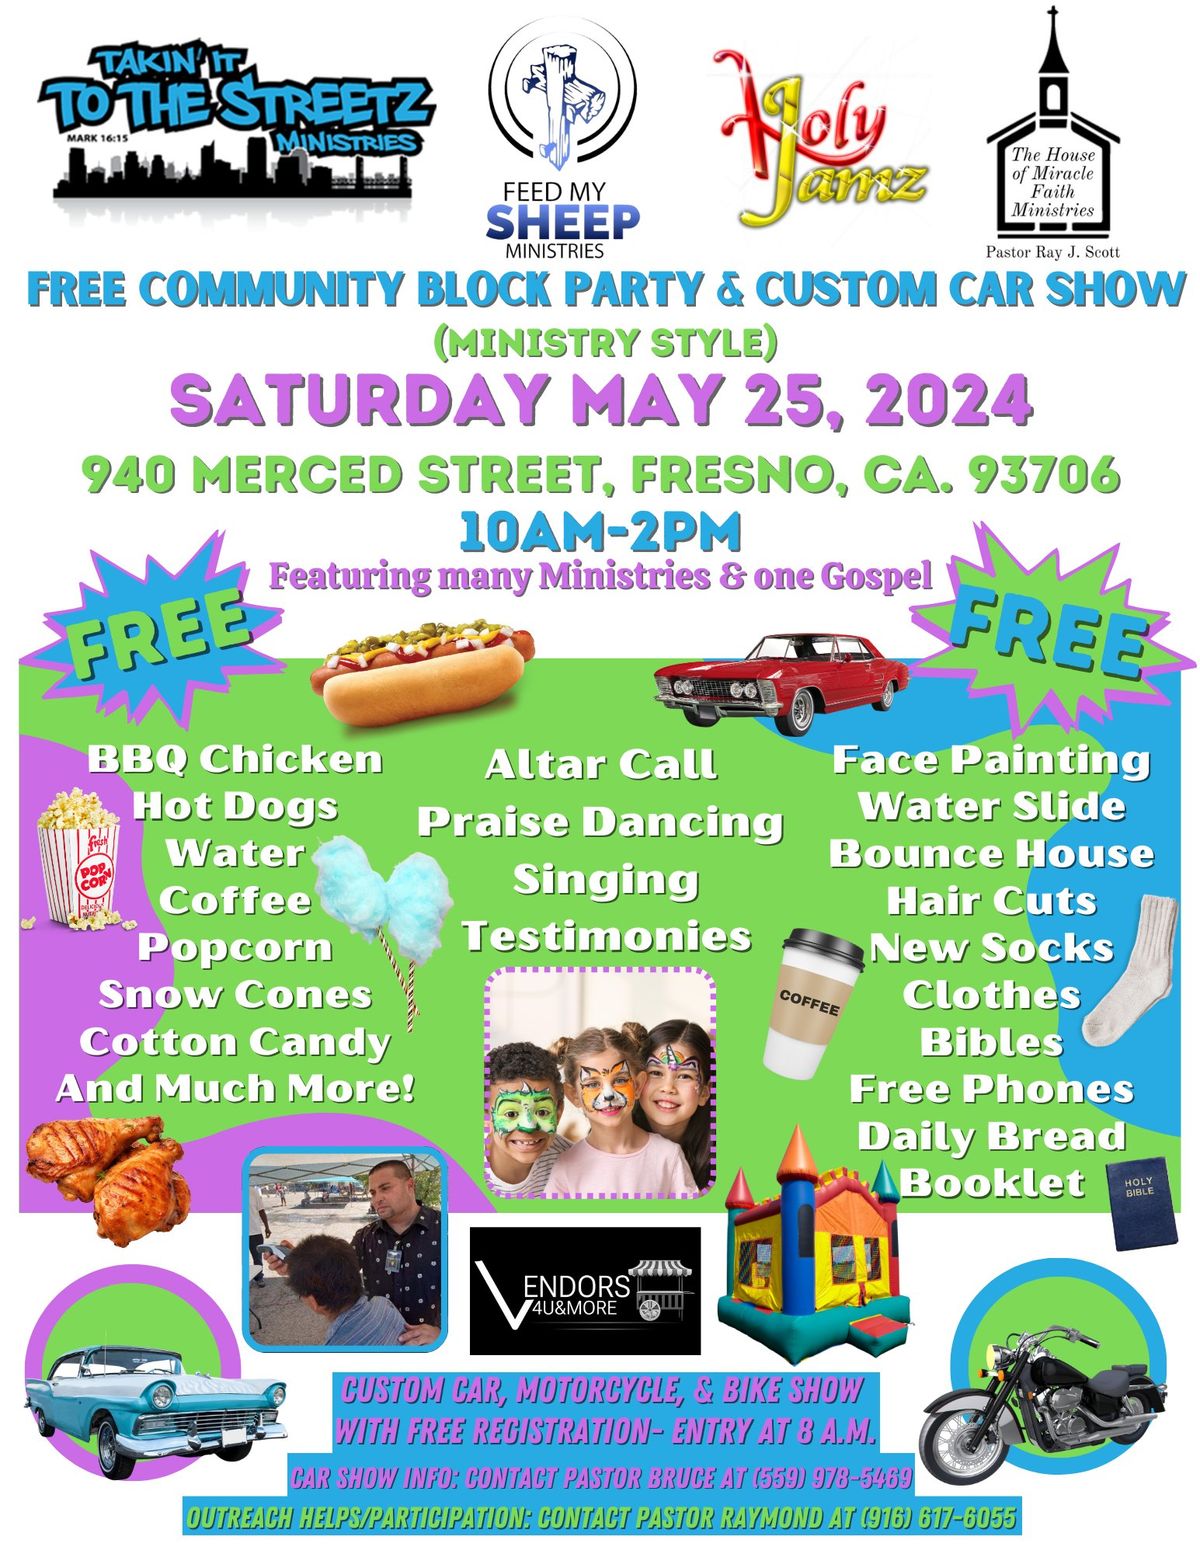  FREE Community Block Party & Custom Car Show